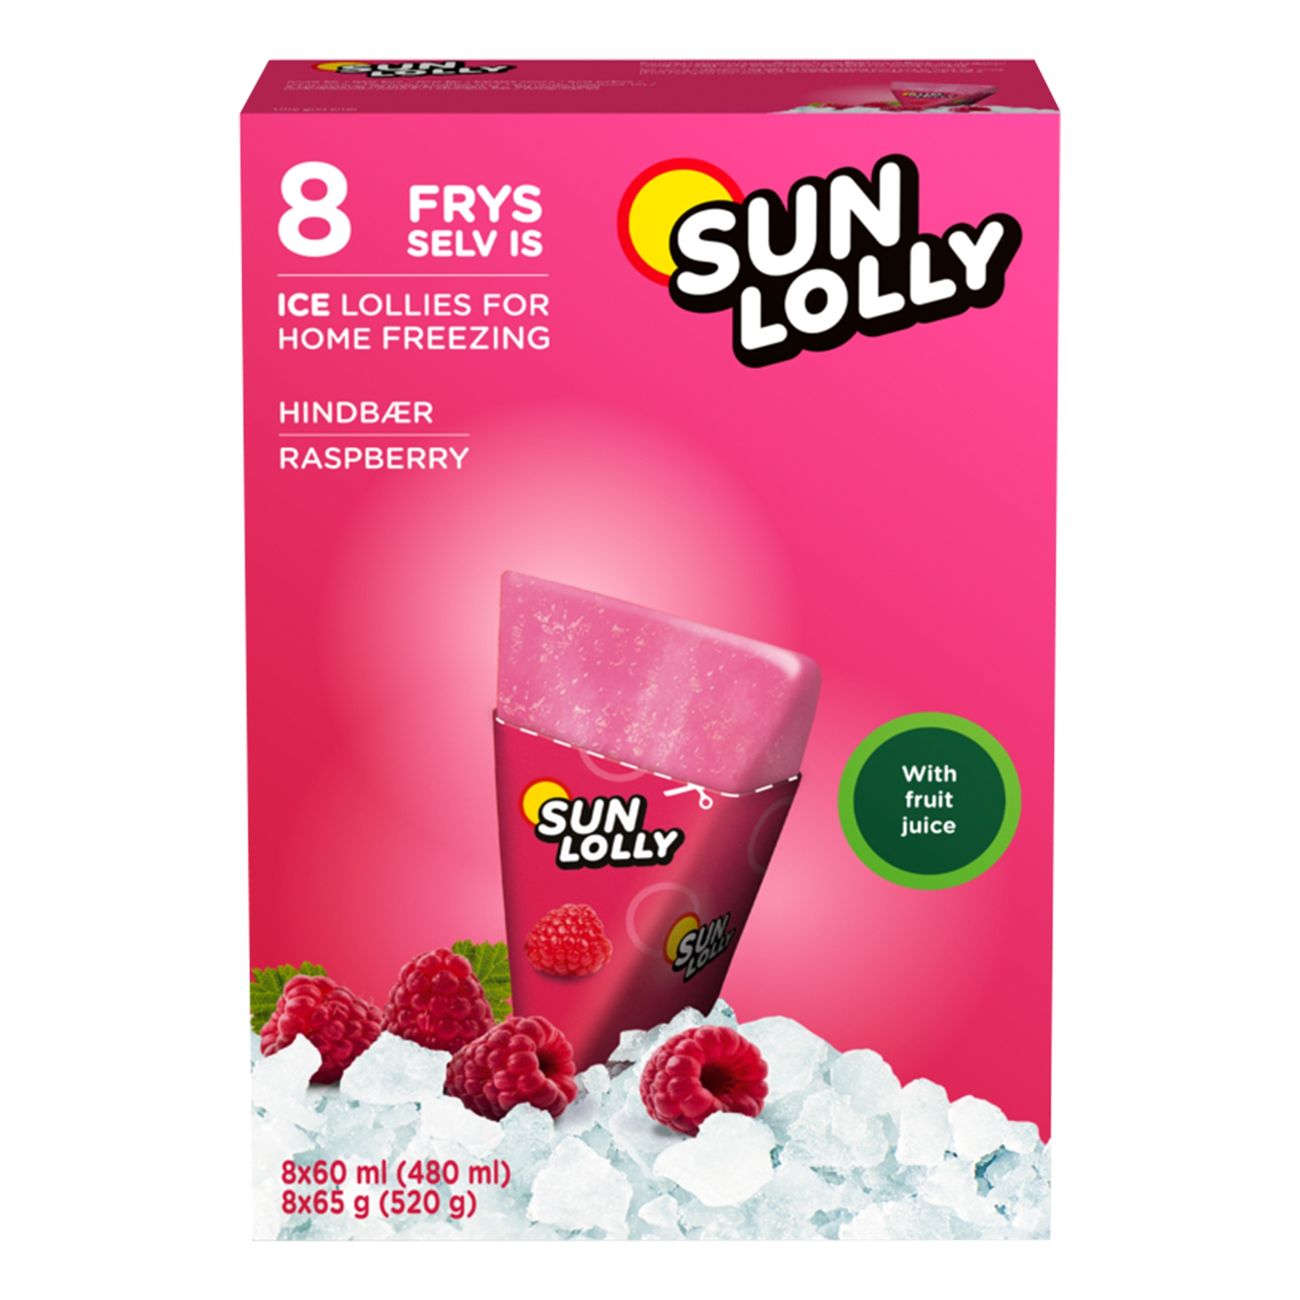 sun-lolly-hallon-isglass-93701-1